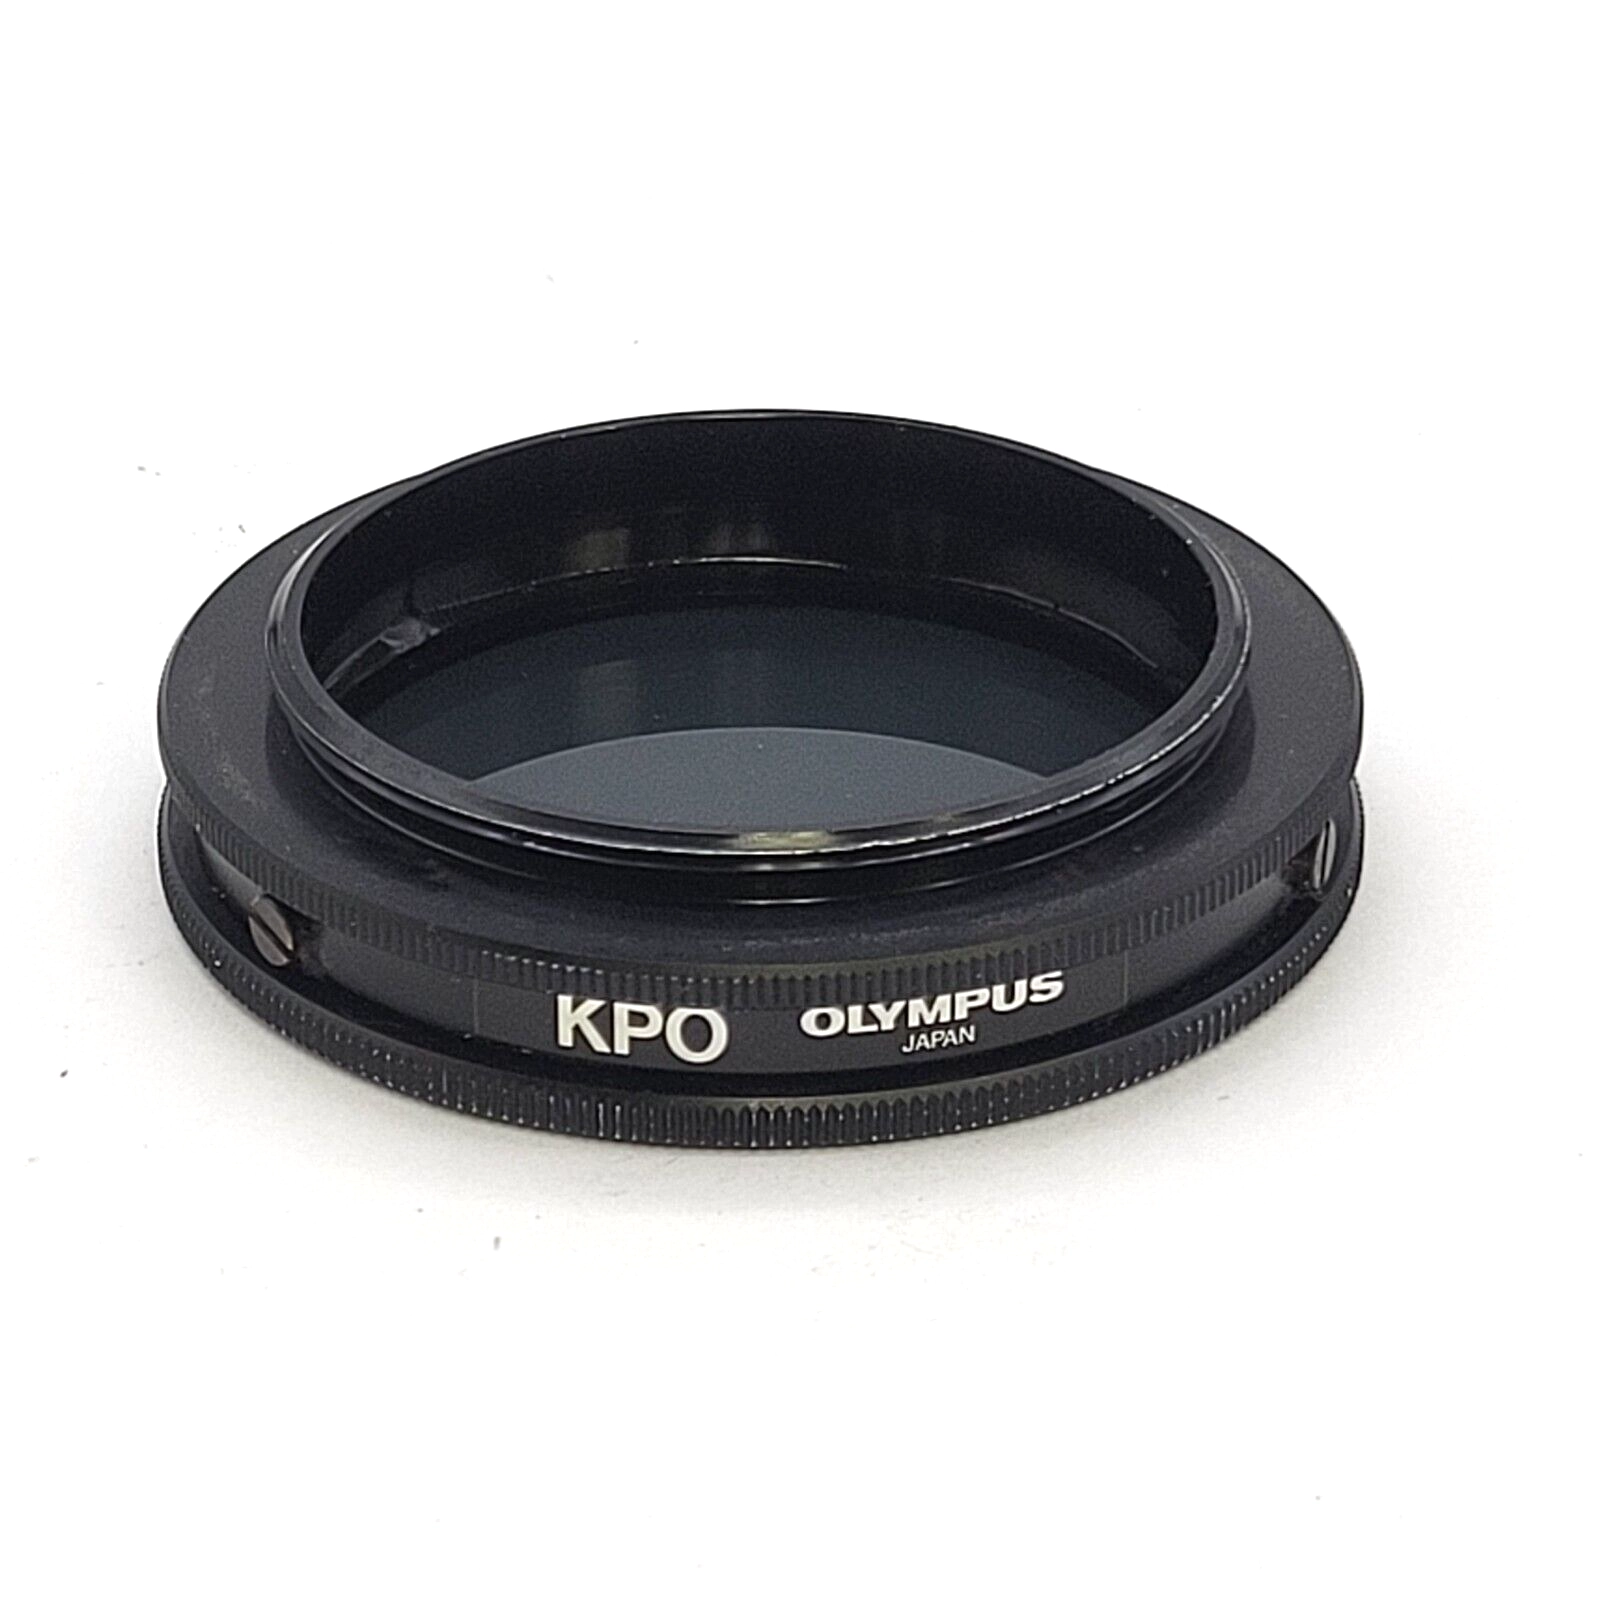 Olympus Stereo Microscope KPO Polarizing Filter Lens for SZH SZX